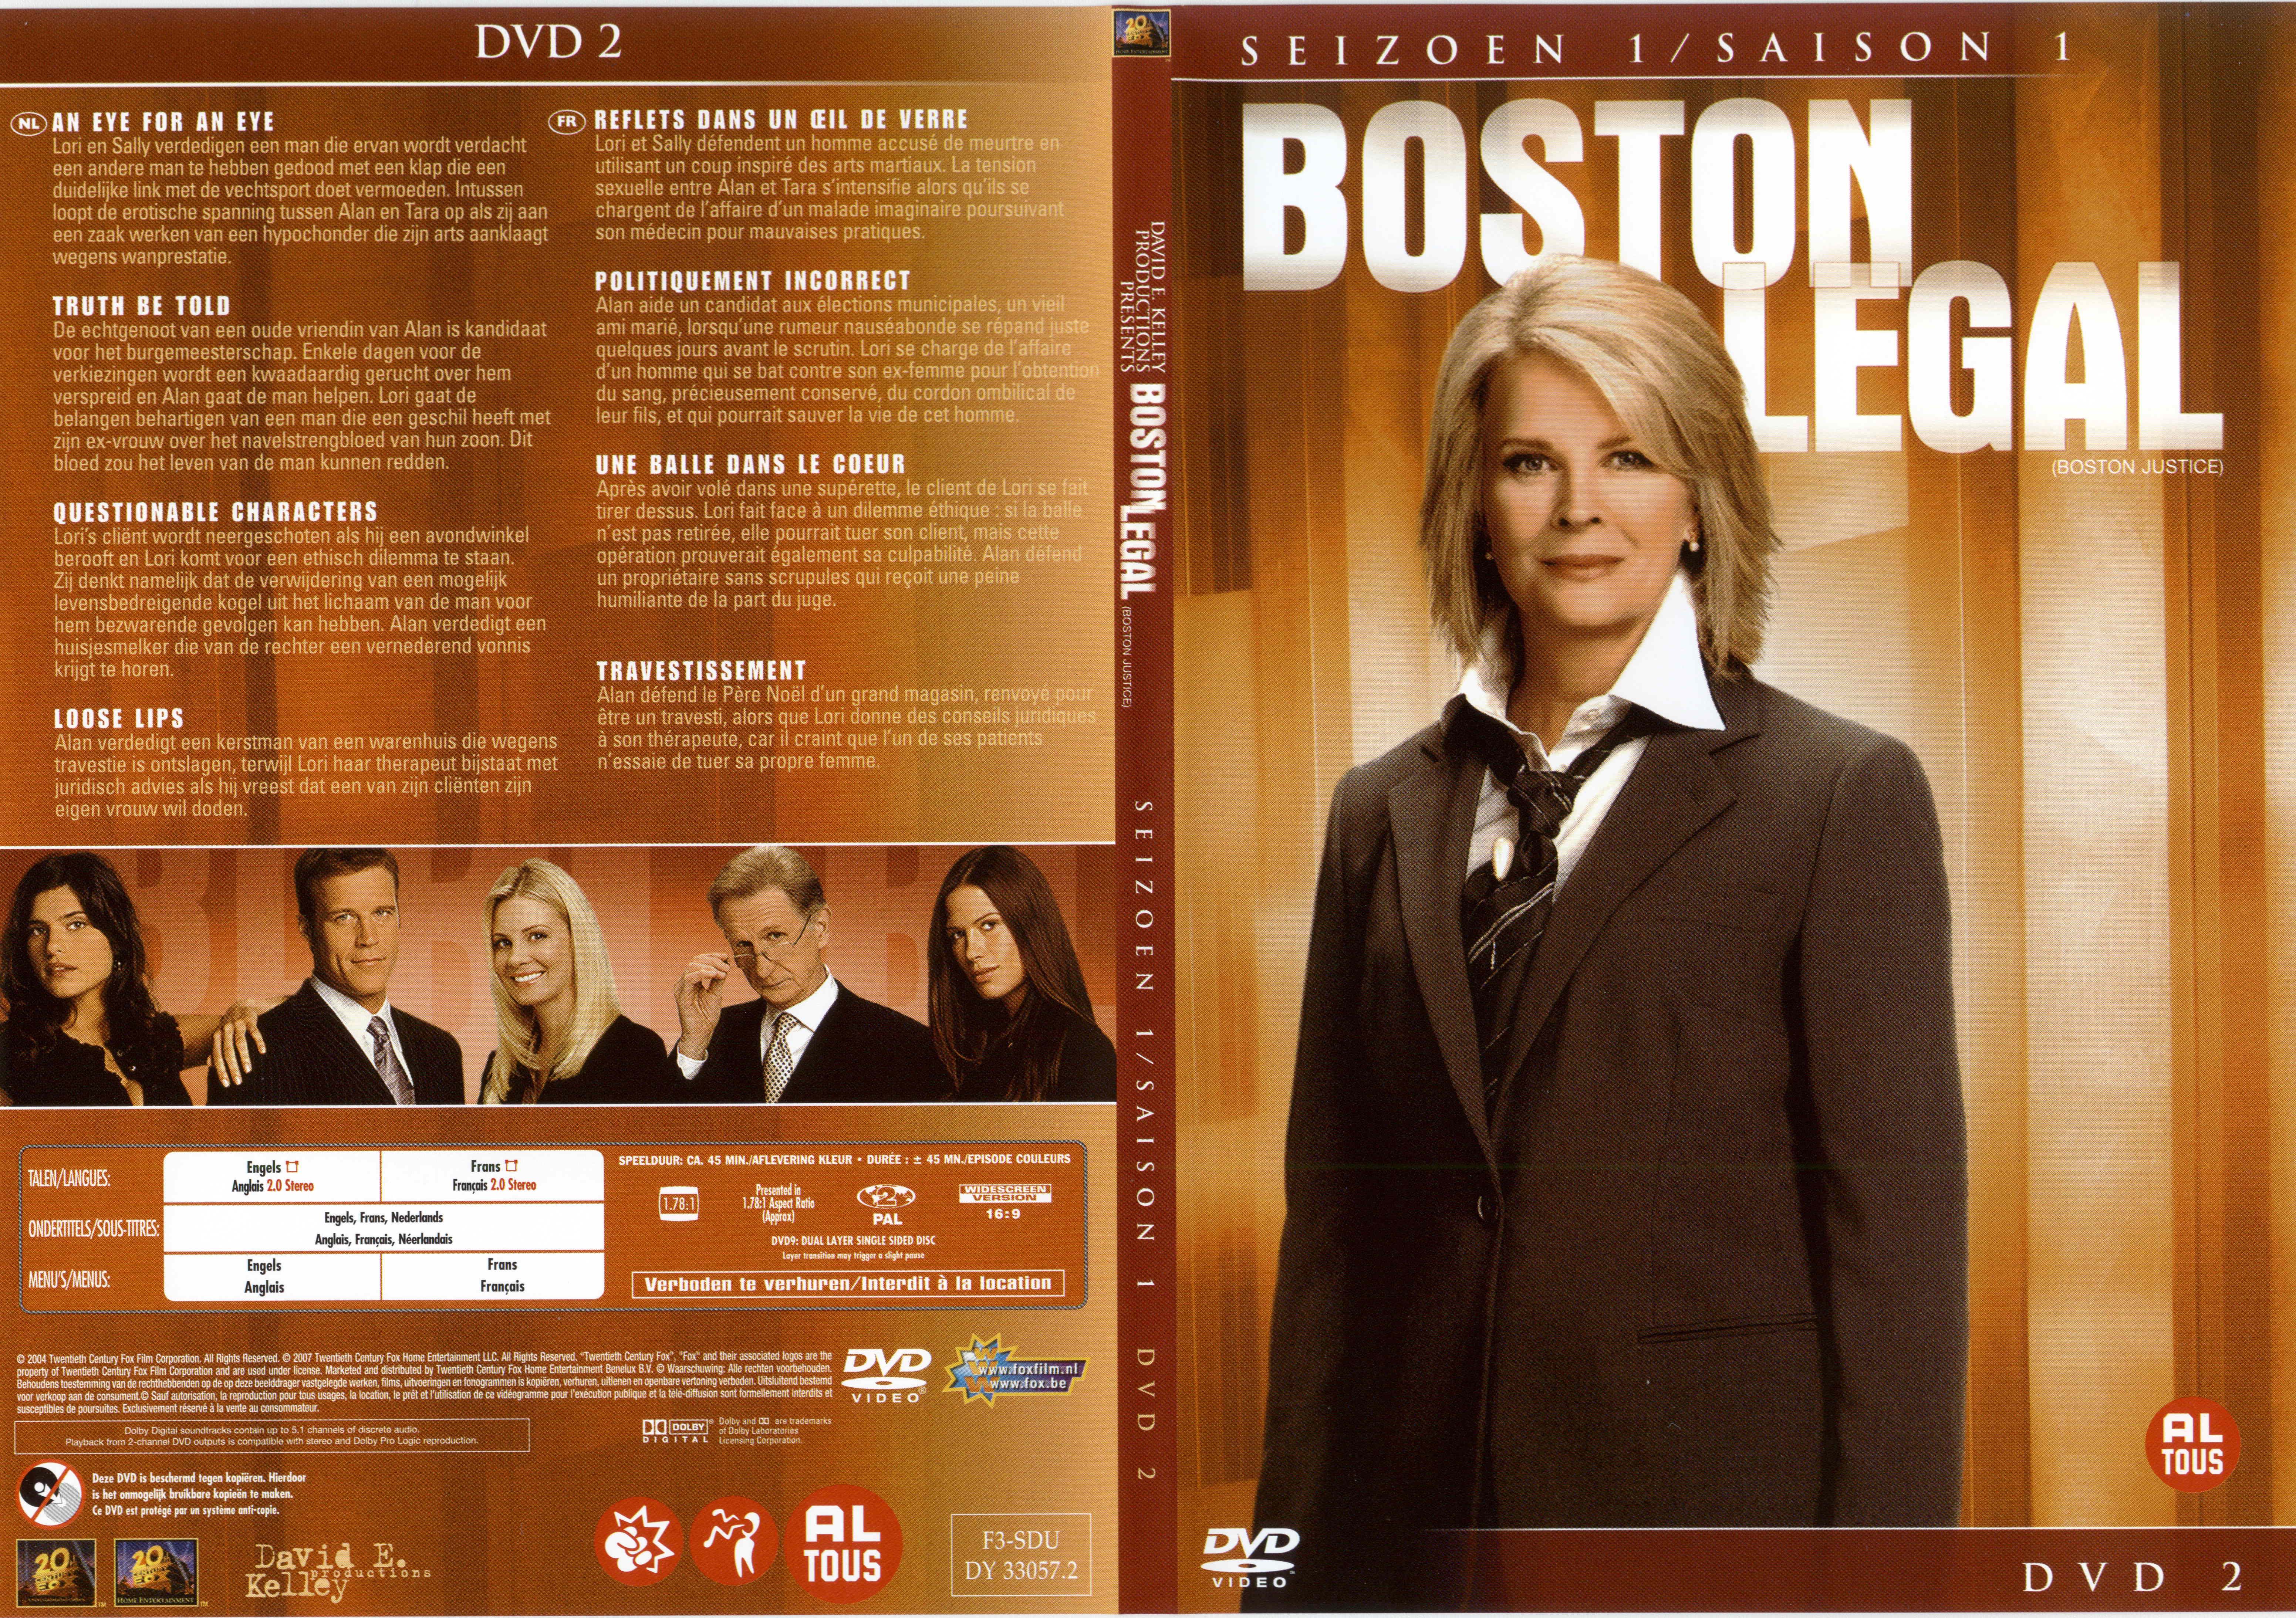 Jaquette DVD Boston legal - Boston justice Saison 1 DVD 2